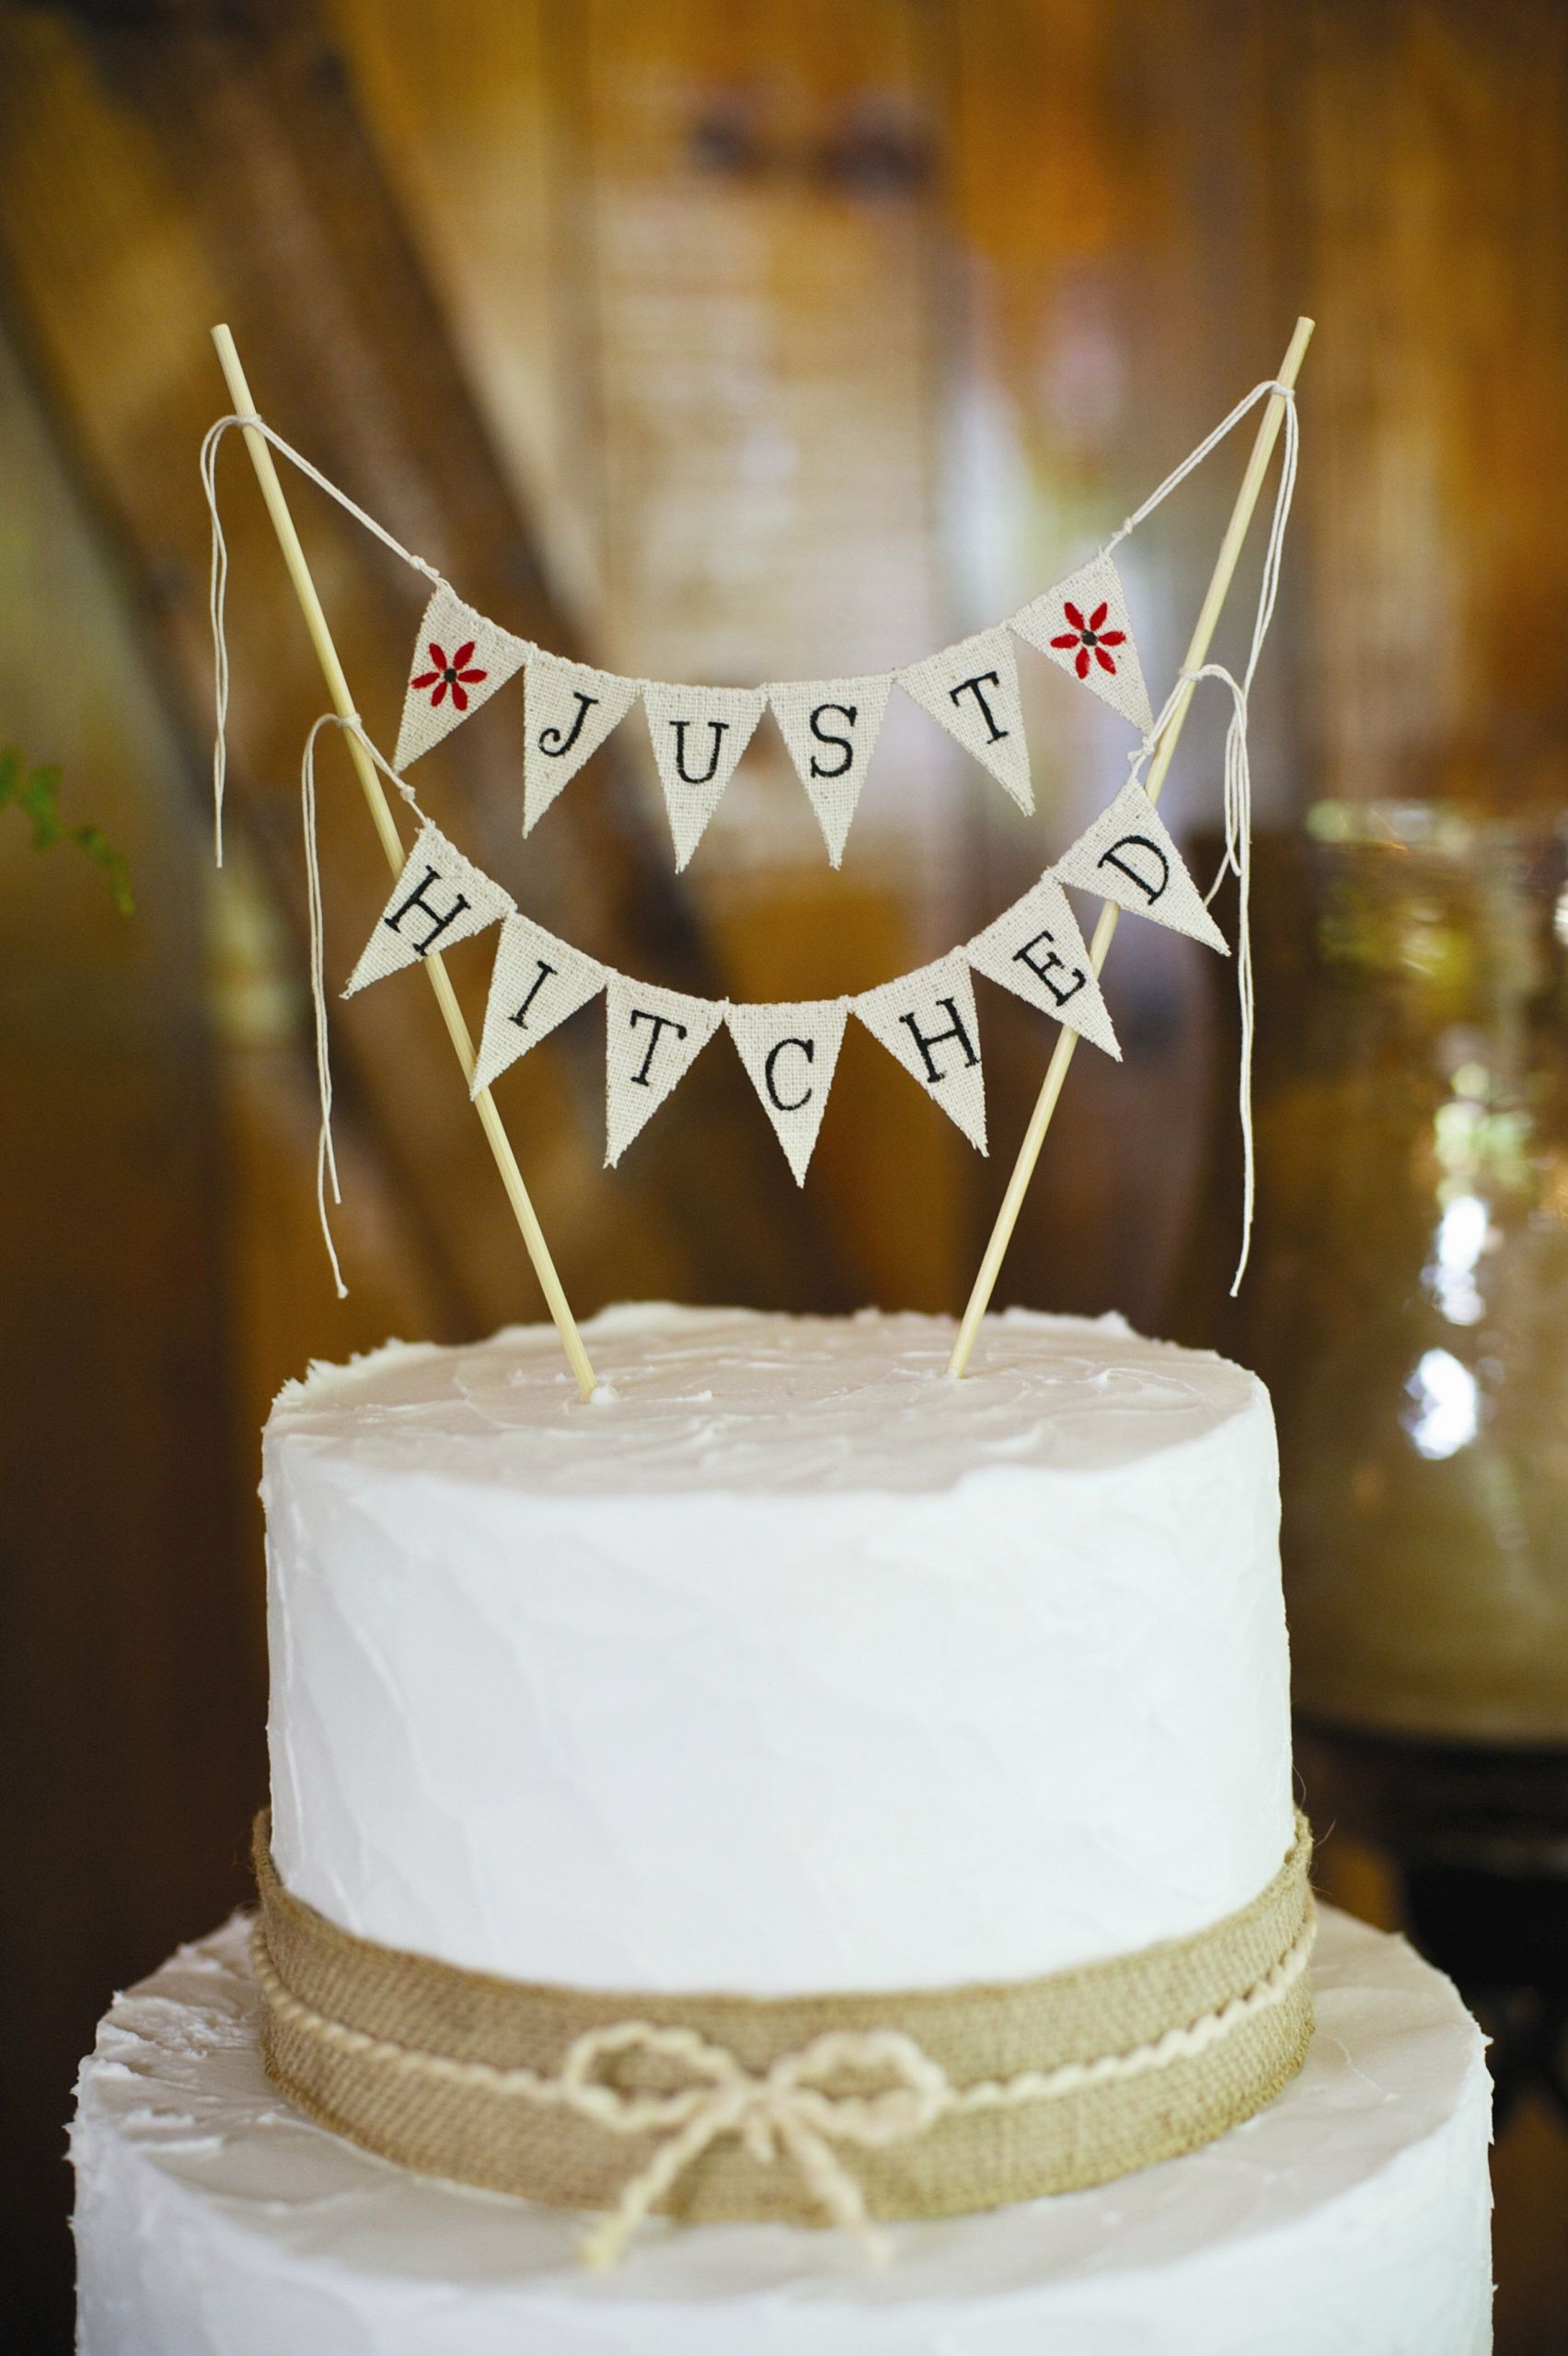 Burlap Wedding Cake Toppers
 Burlap Wedding Cake Topper